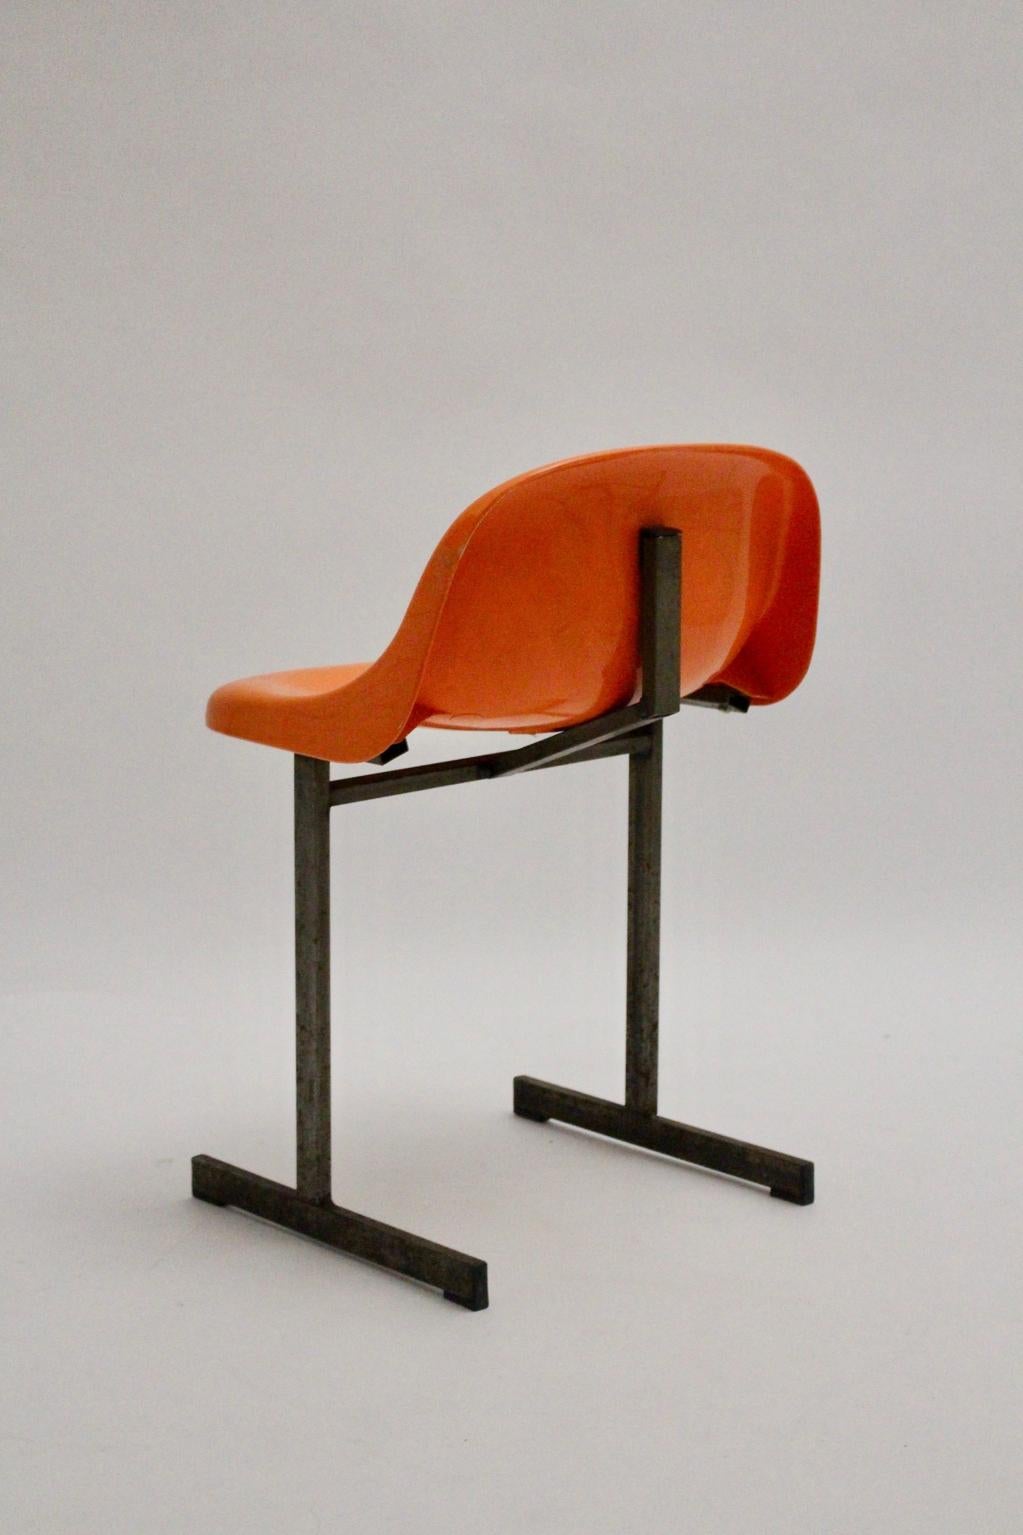 Space Age Vintage Orange Plastic Metal Chair 1970s For Sale 7